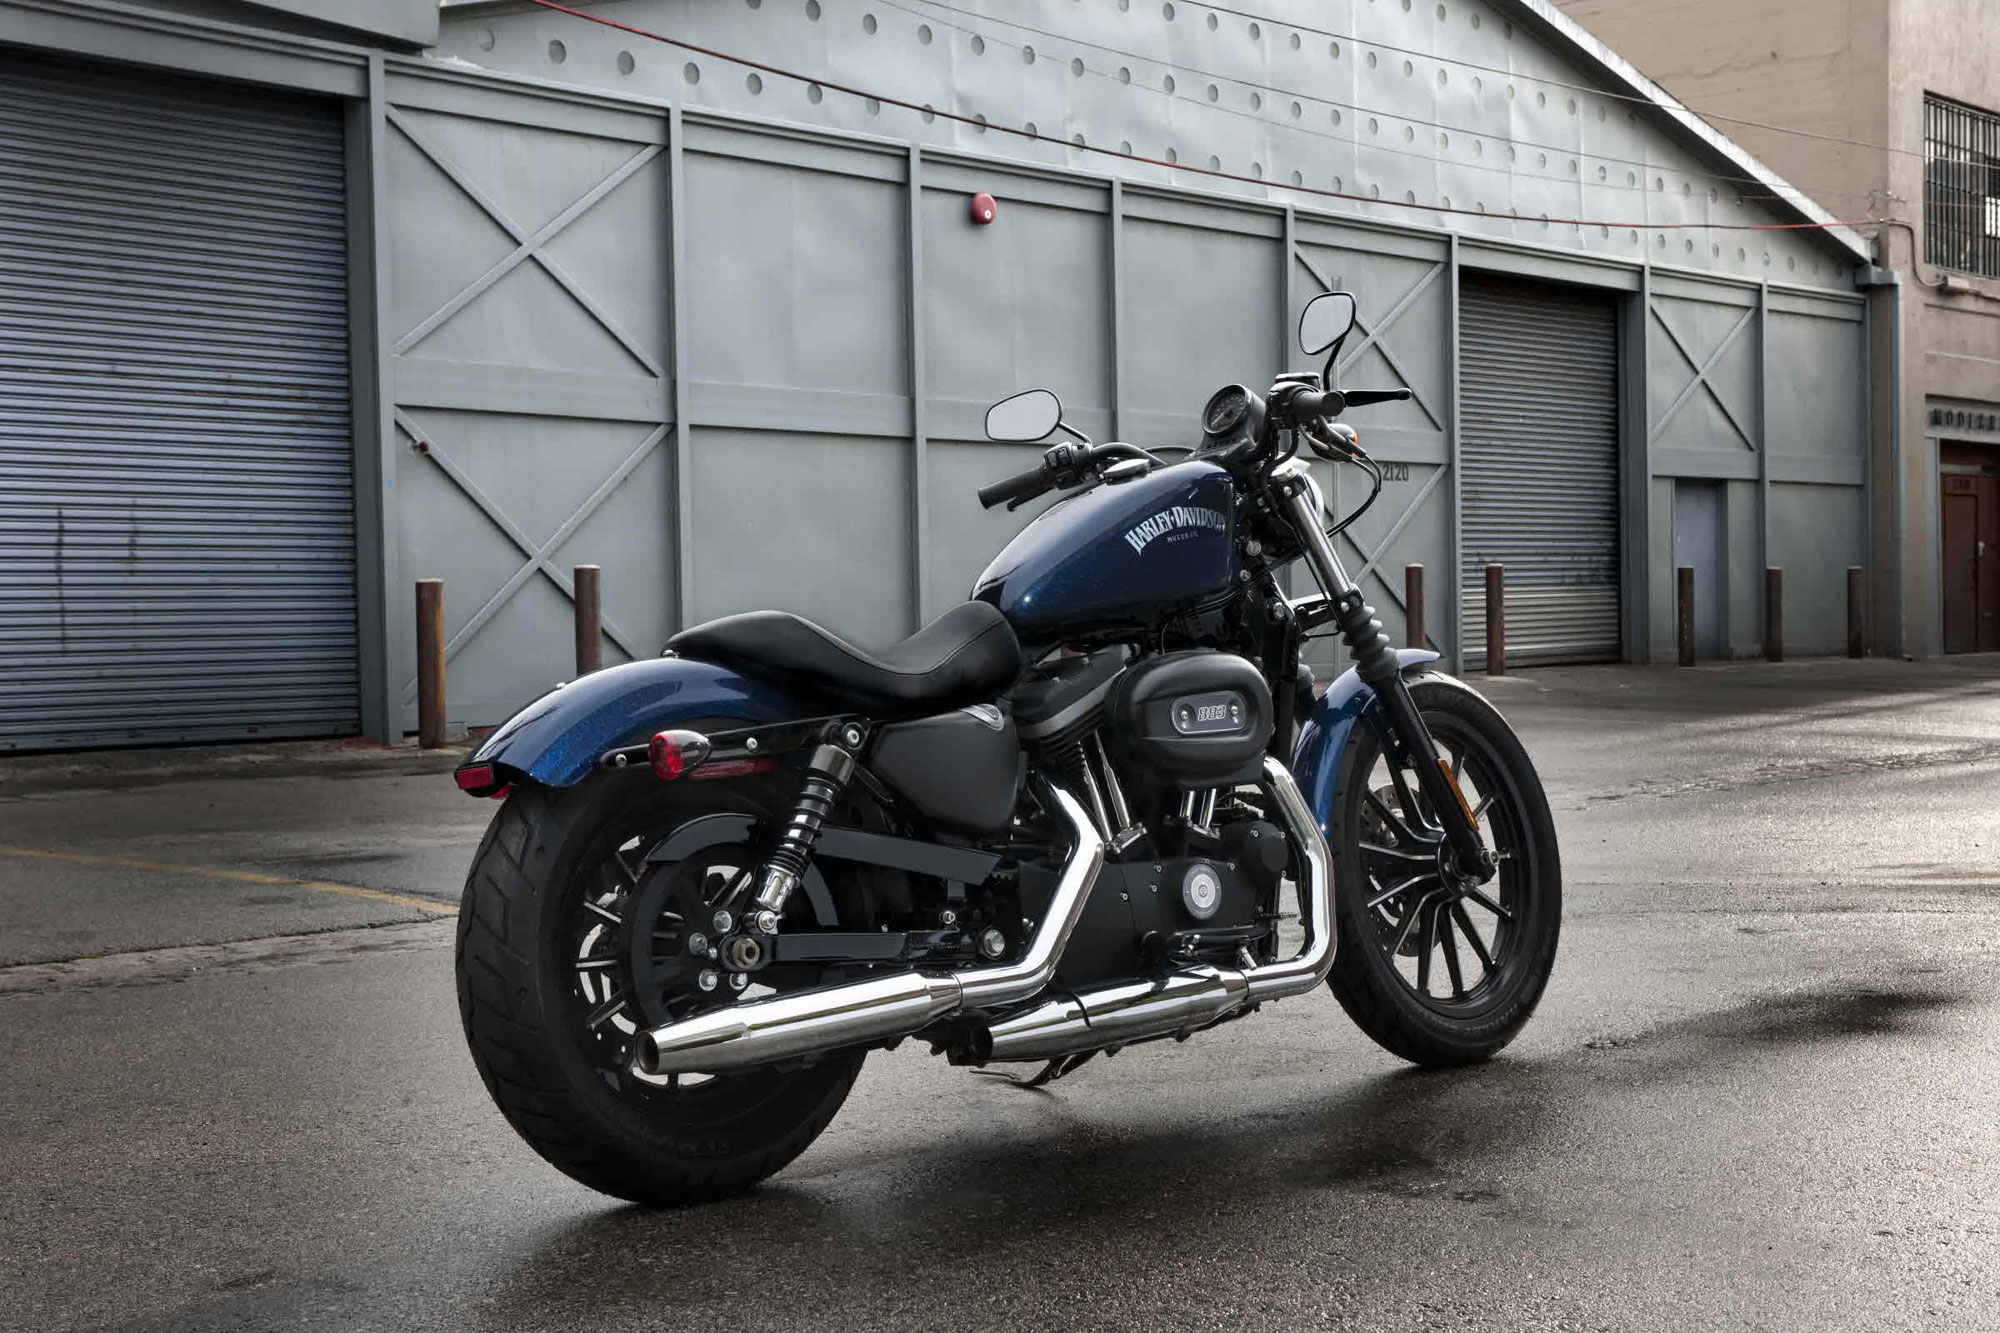 2014 Harley Davidson XL883N Iron 883 f wallpaper | 2014x1343 ...